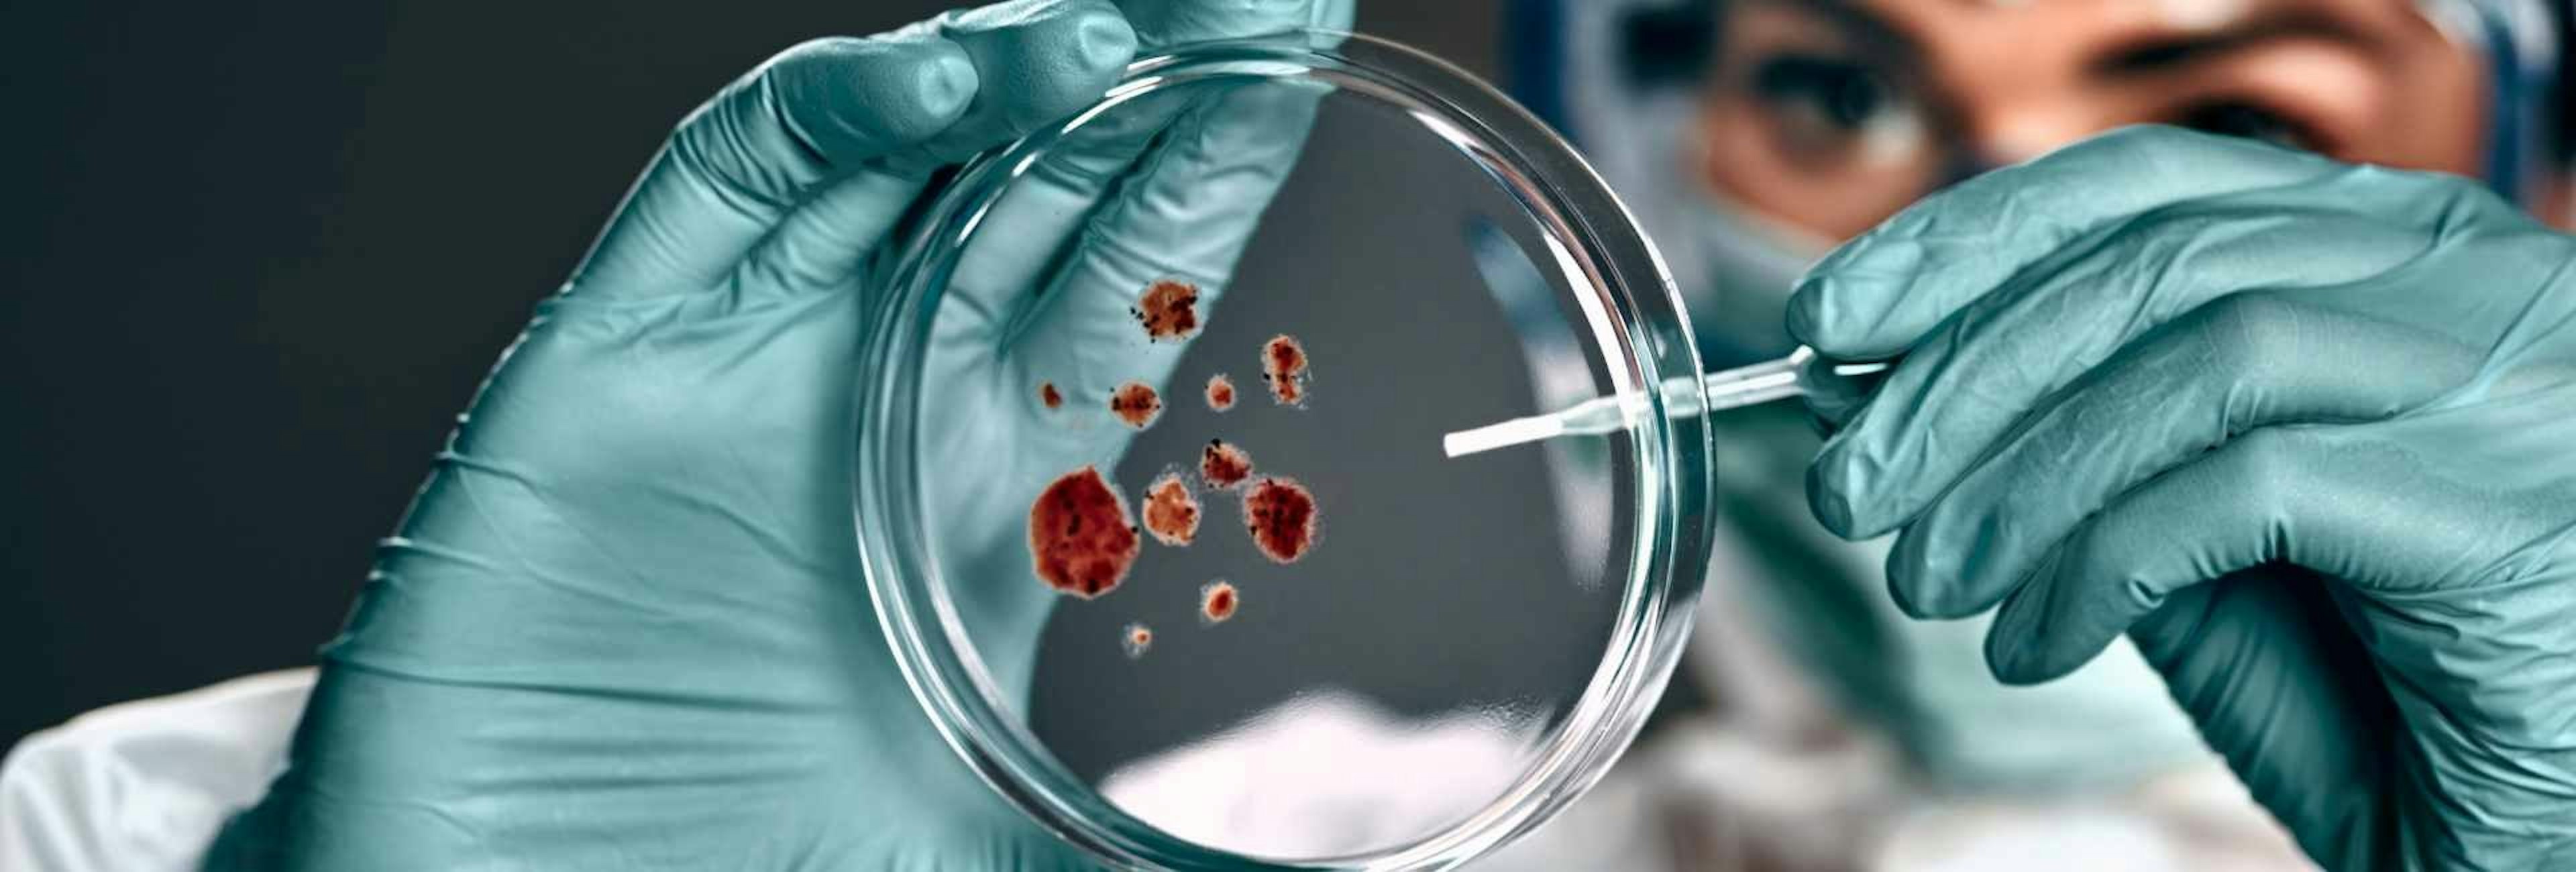 Scientist examining a petri dish with biomaterials